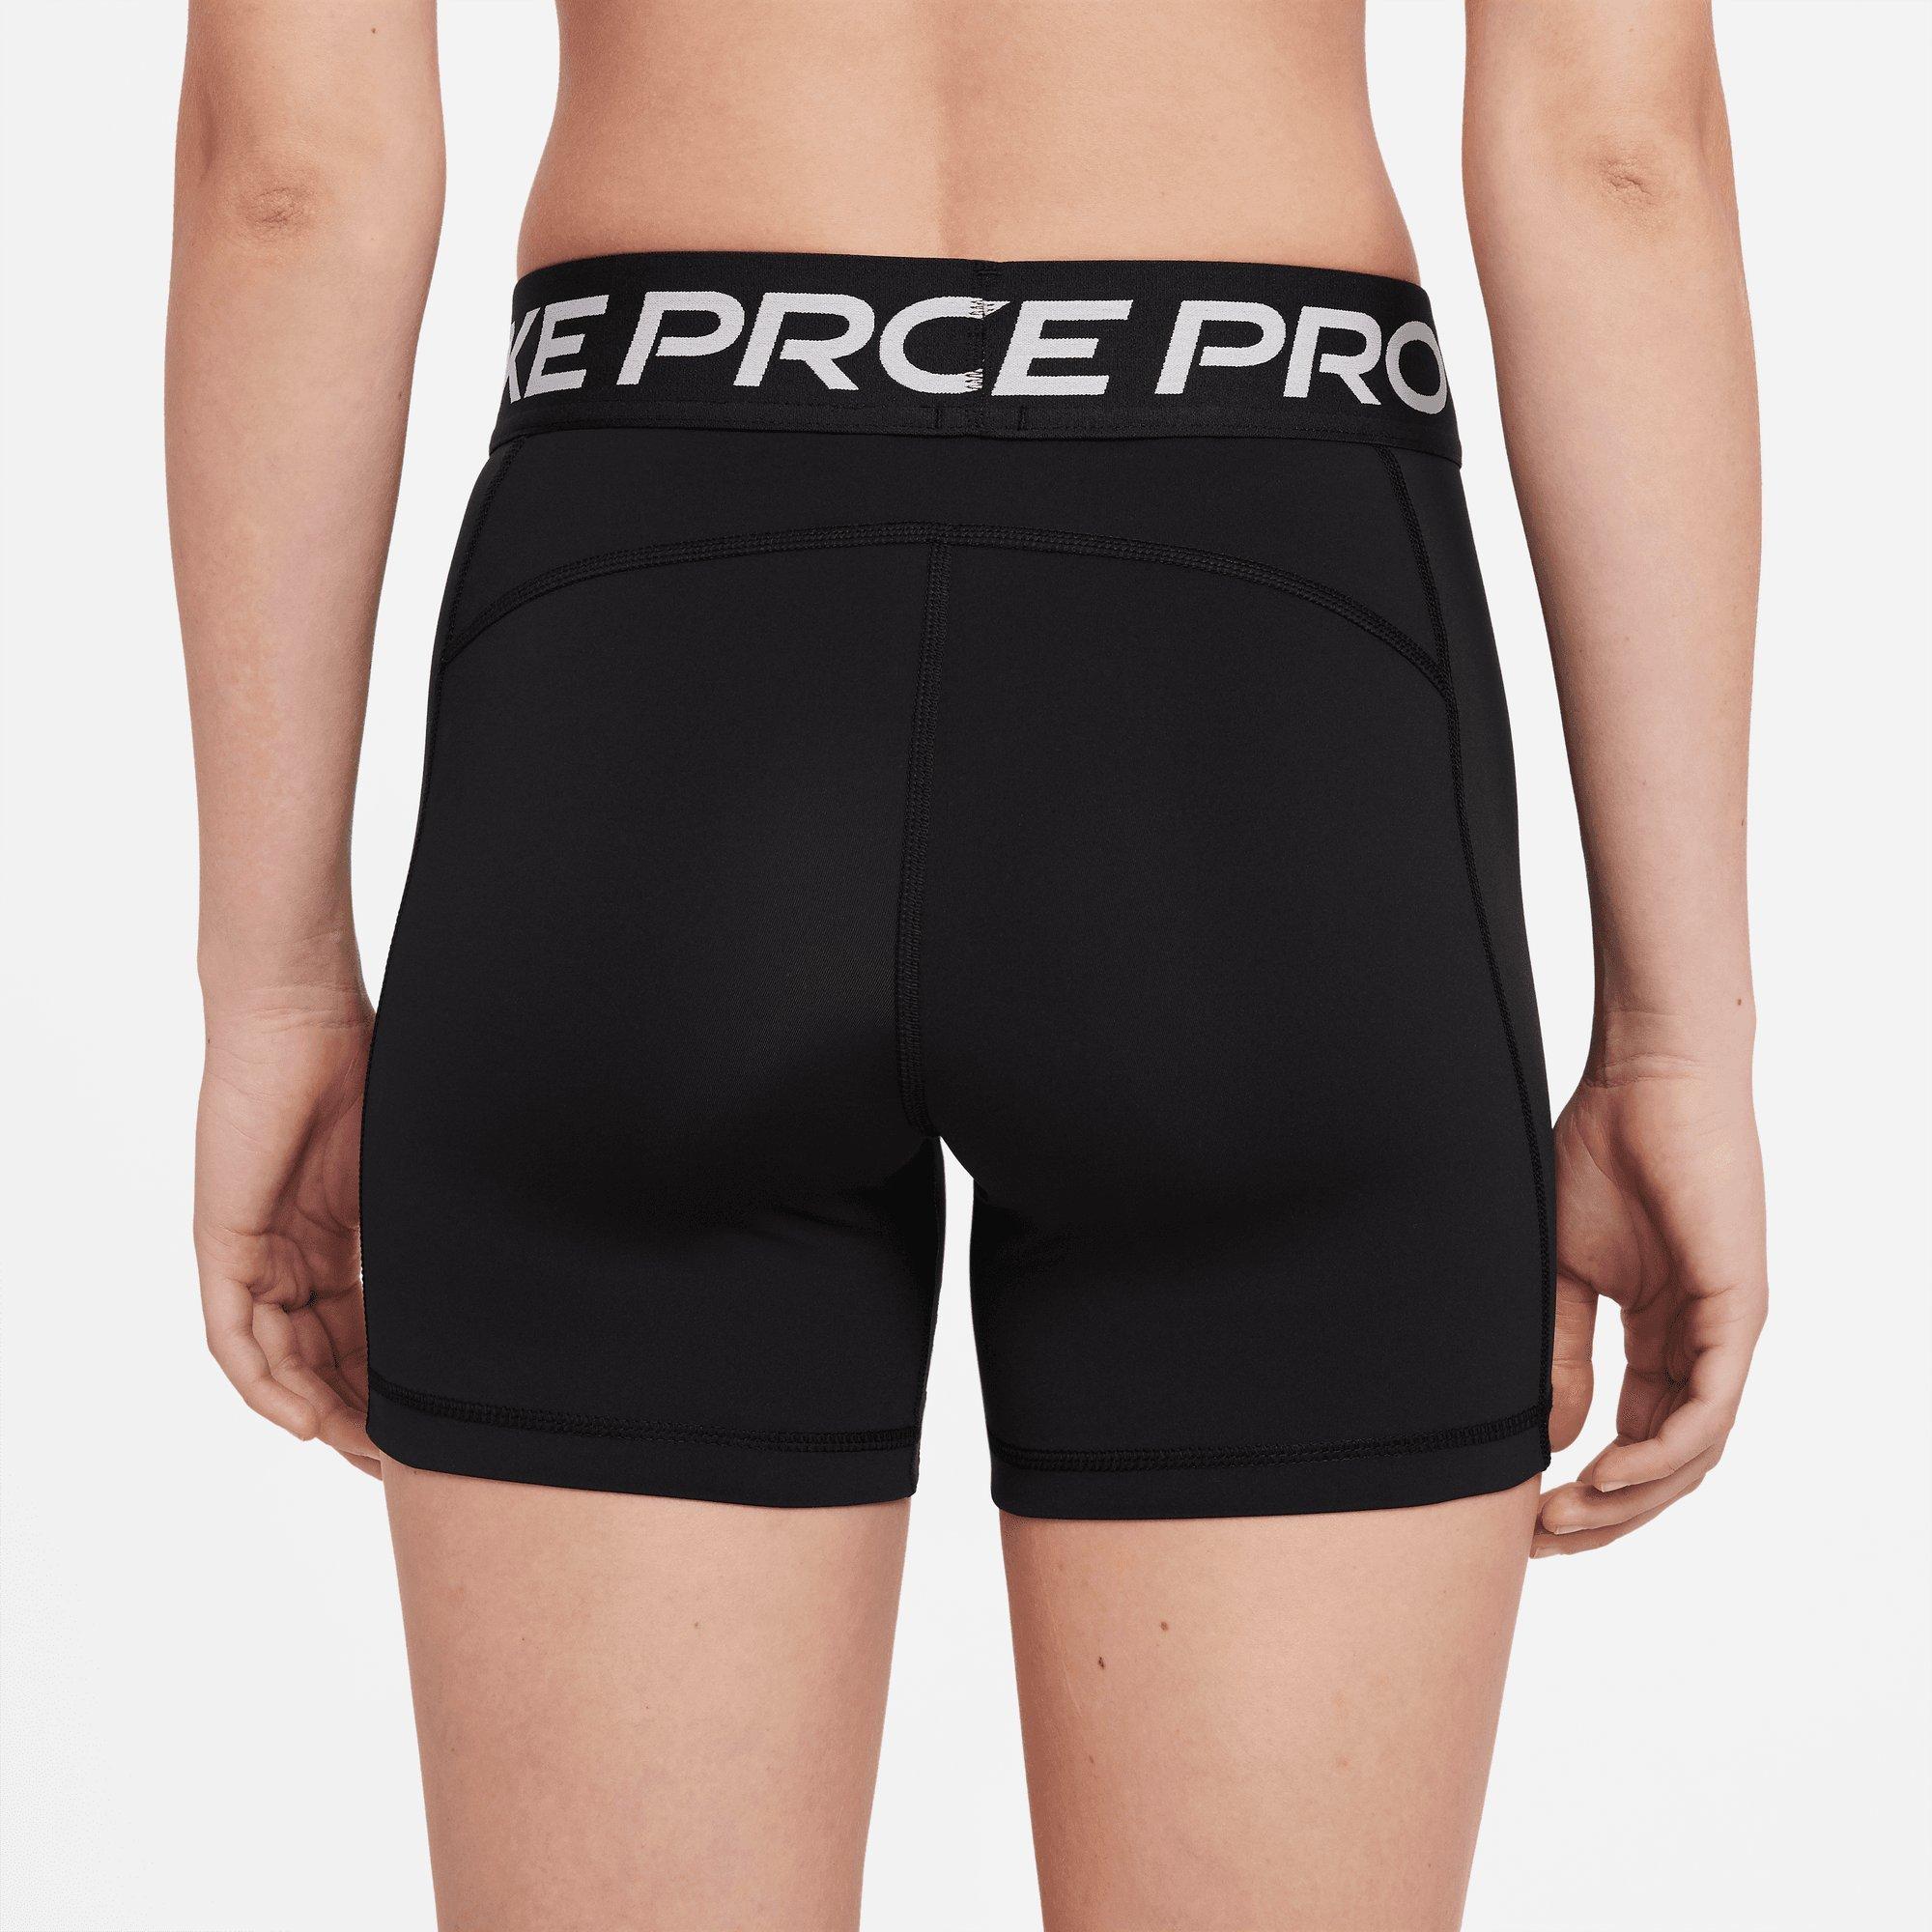 Nike Pro Grey Spandex Shorts Gray - $17 - From SCARLETTS